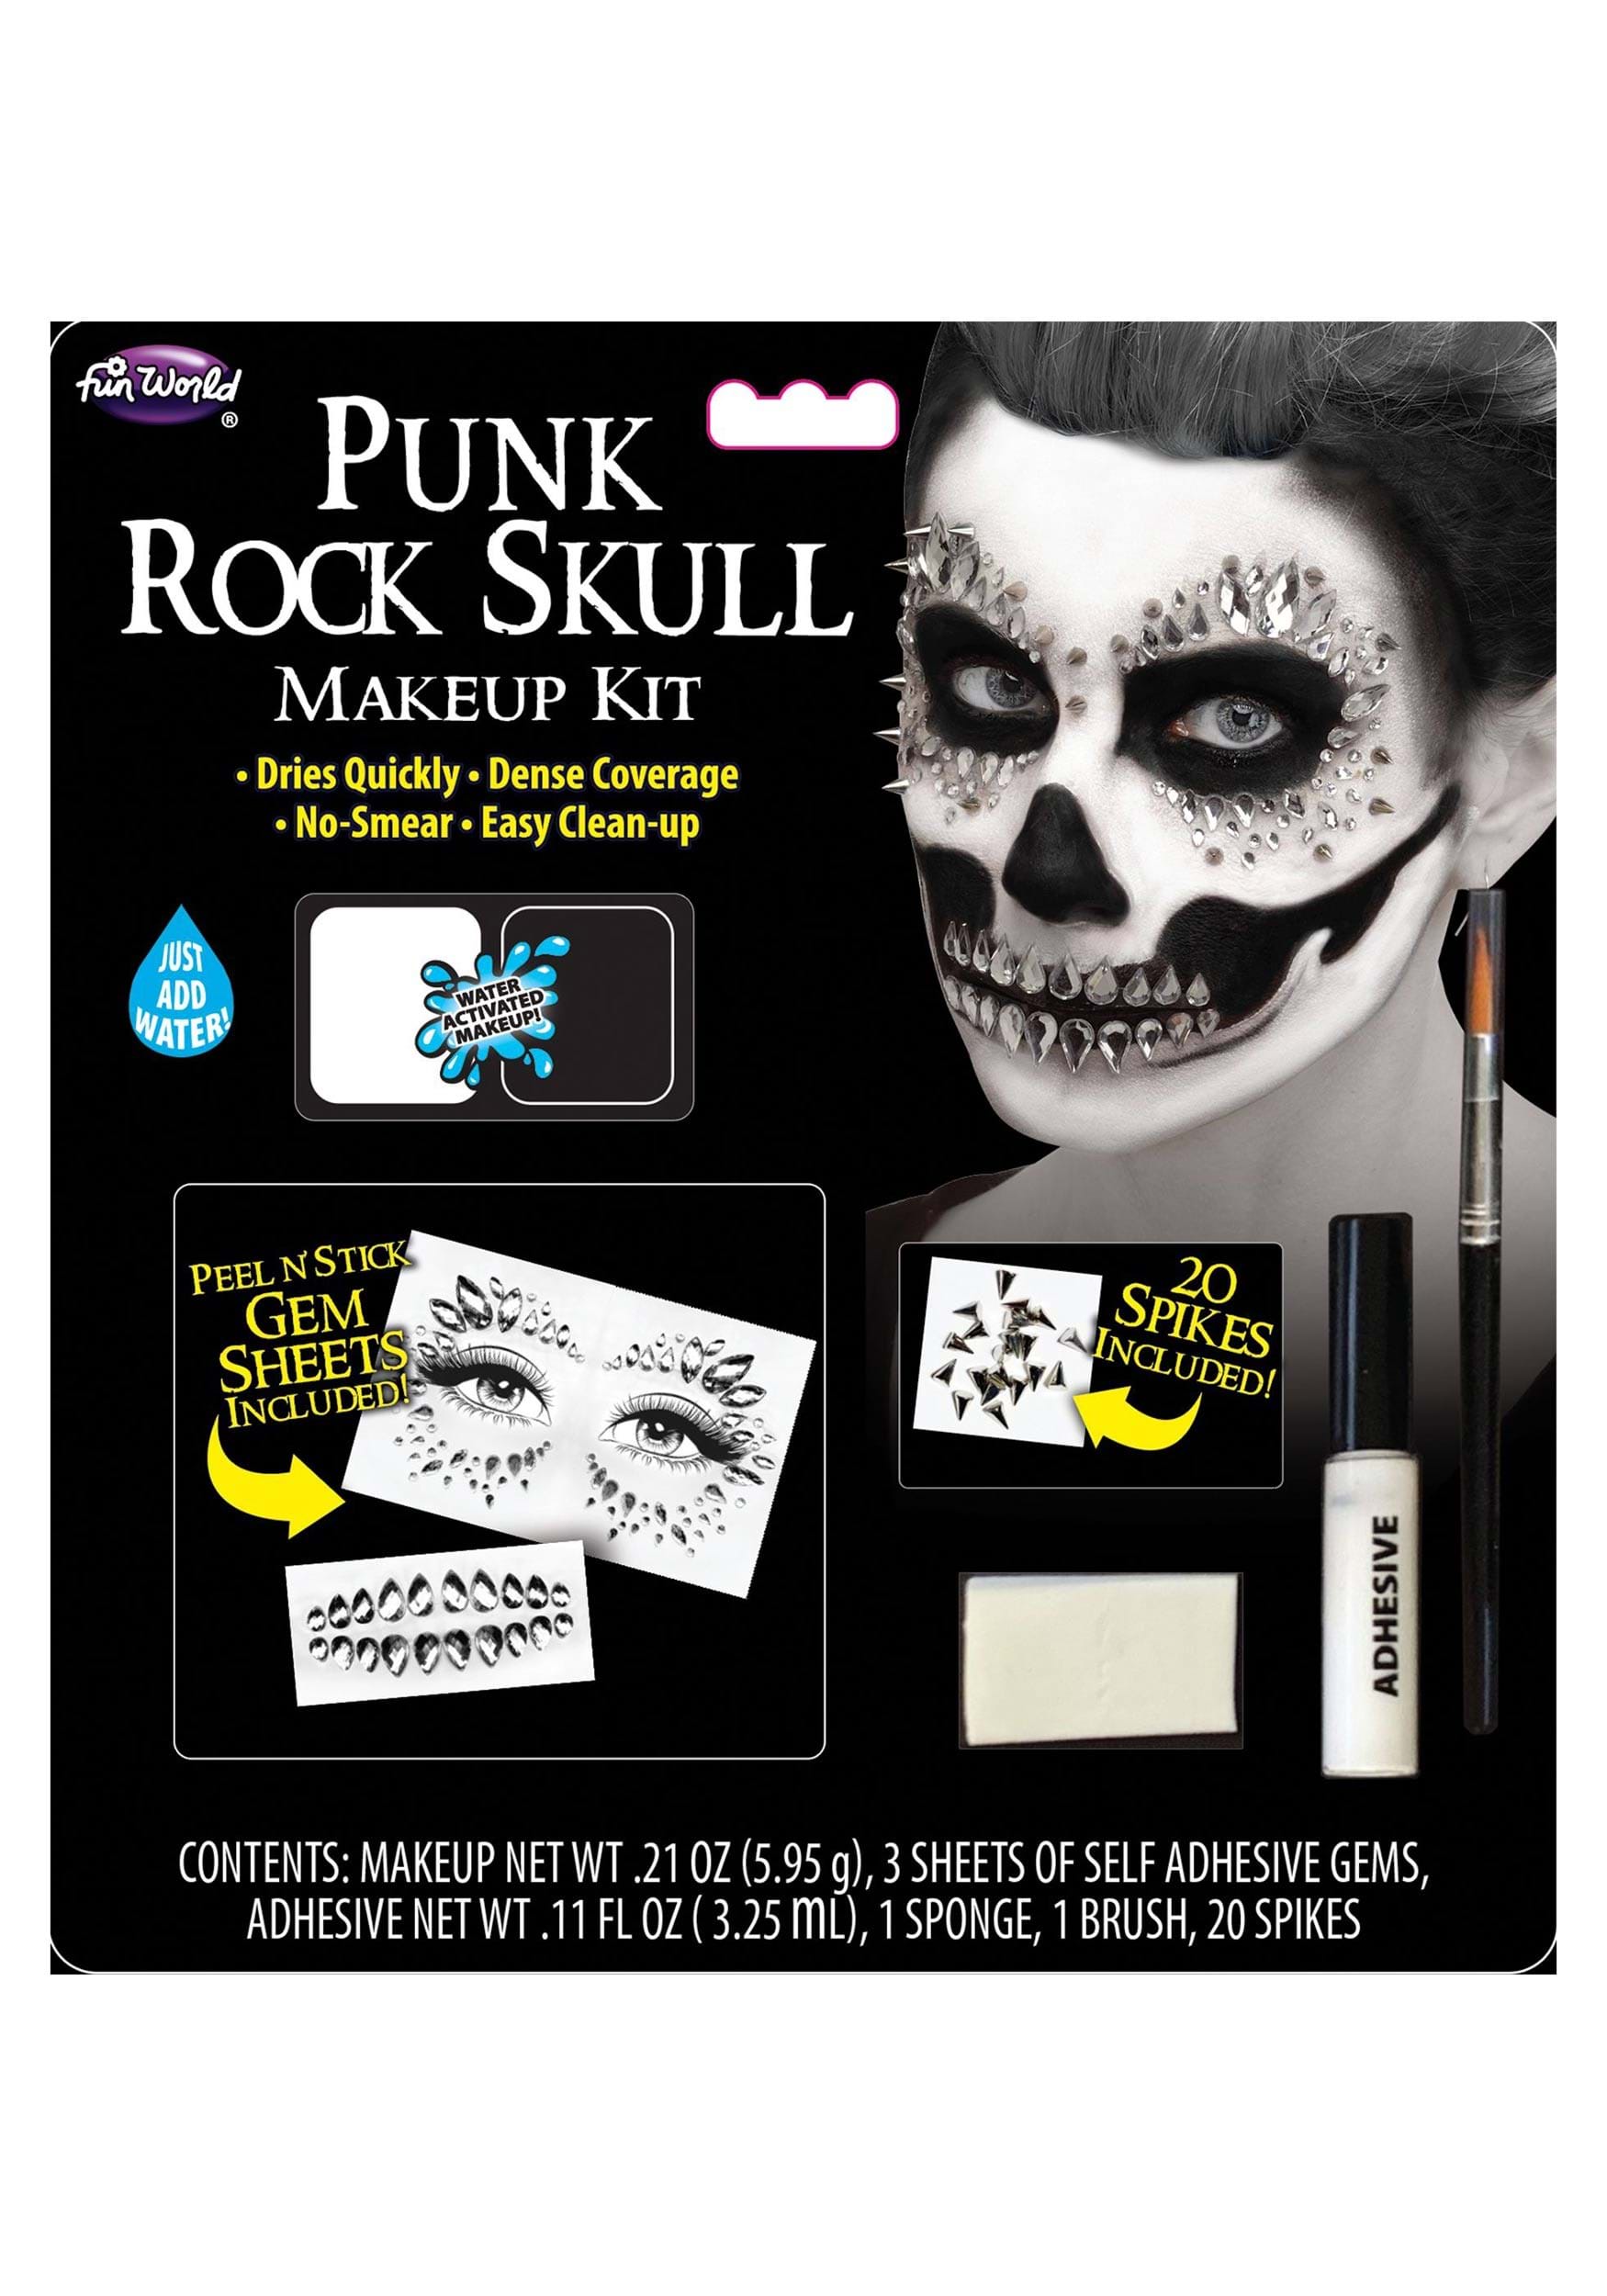 punk rock makeup ideas